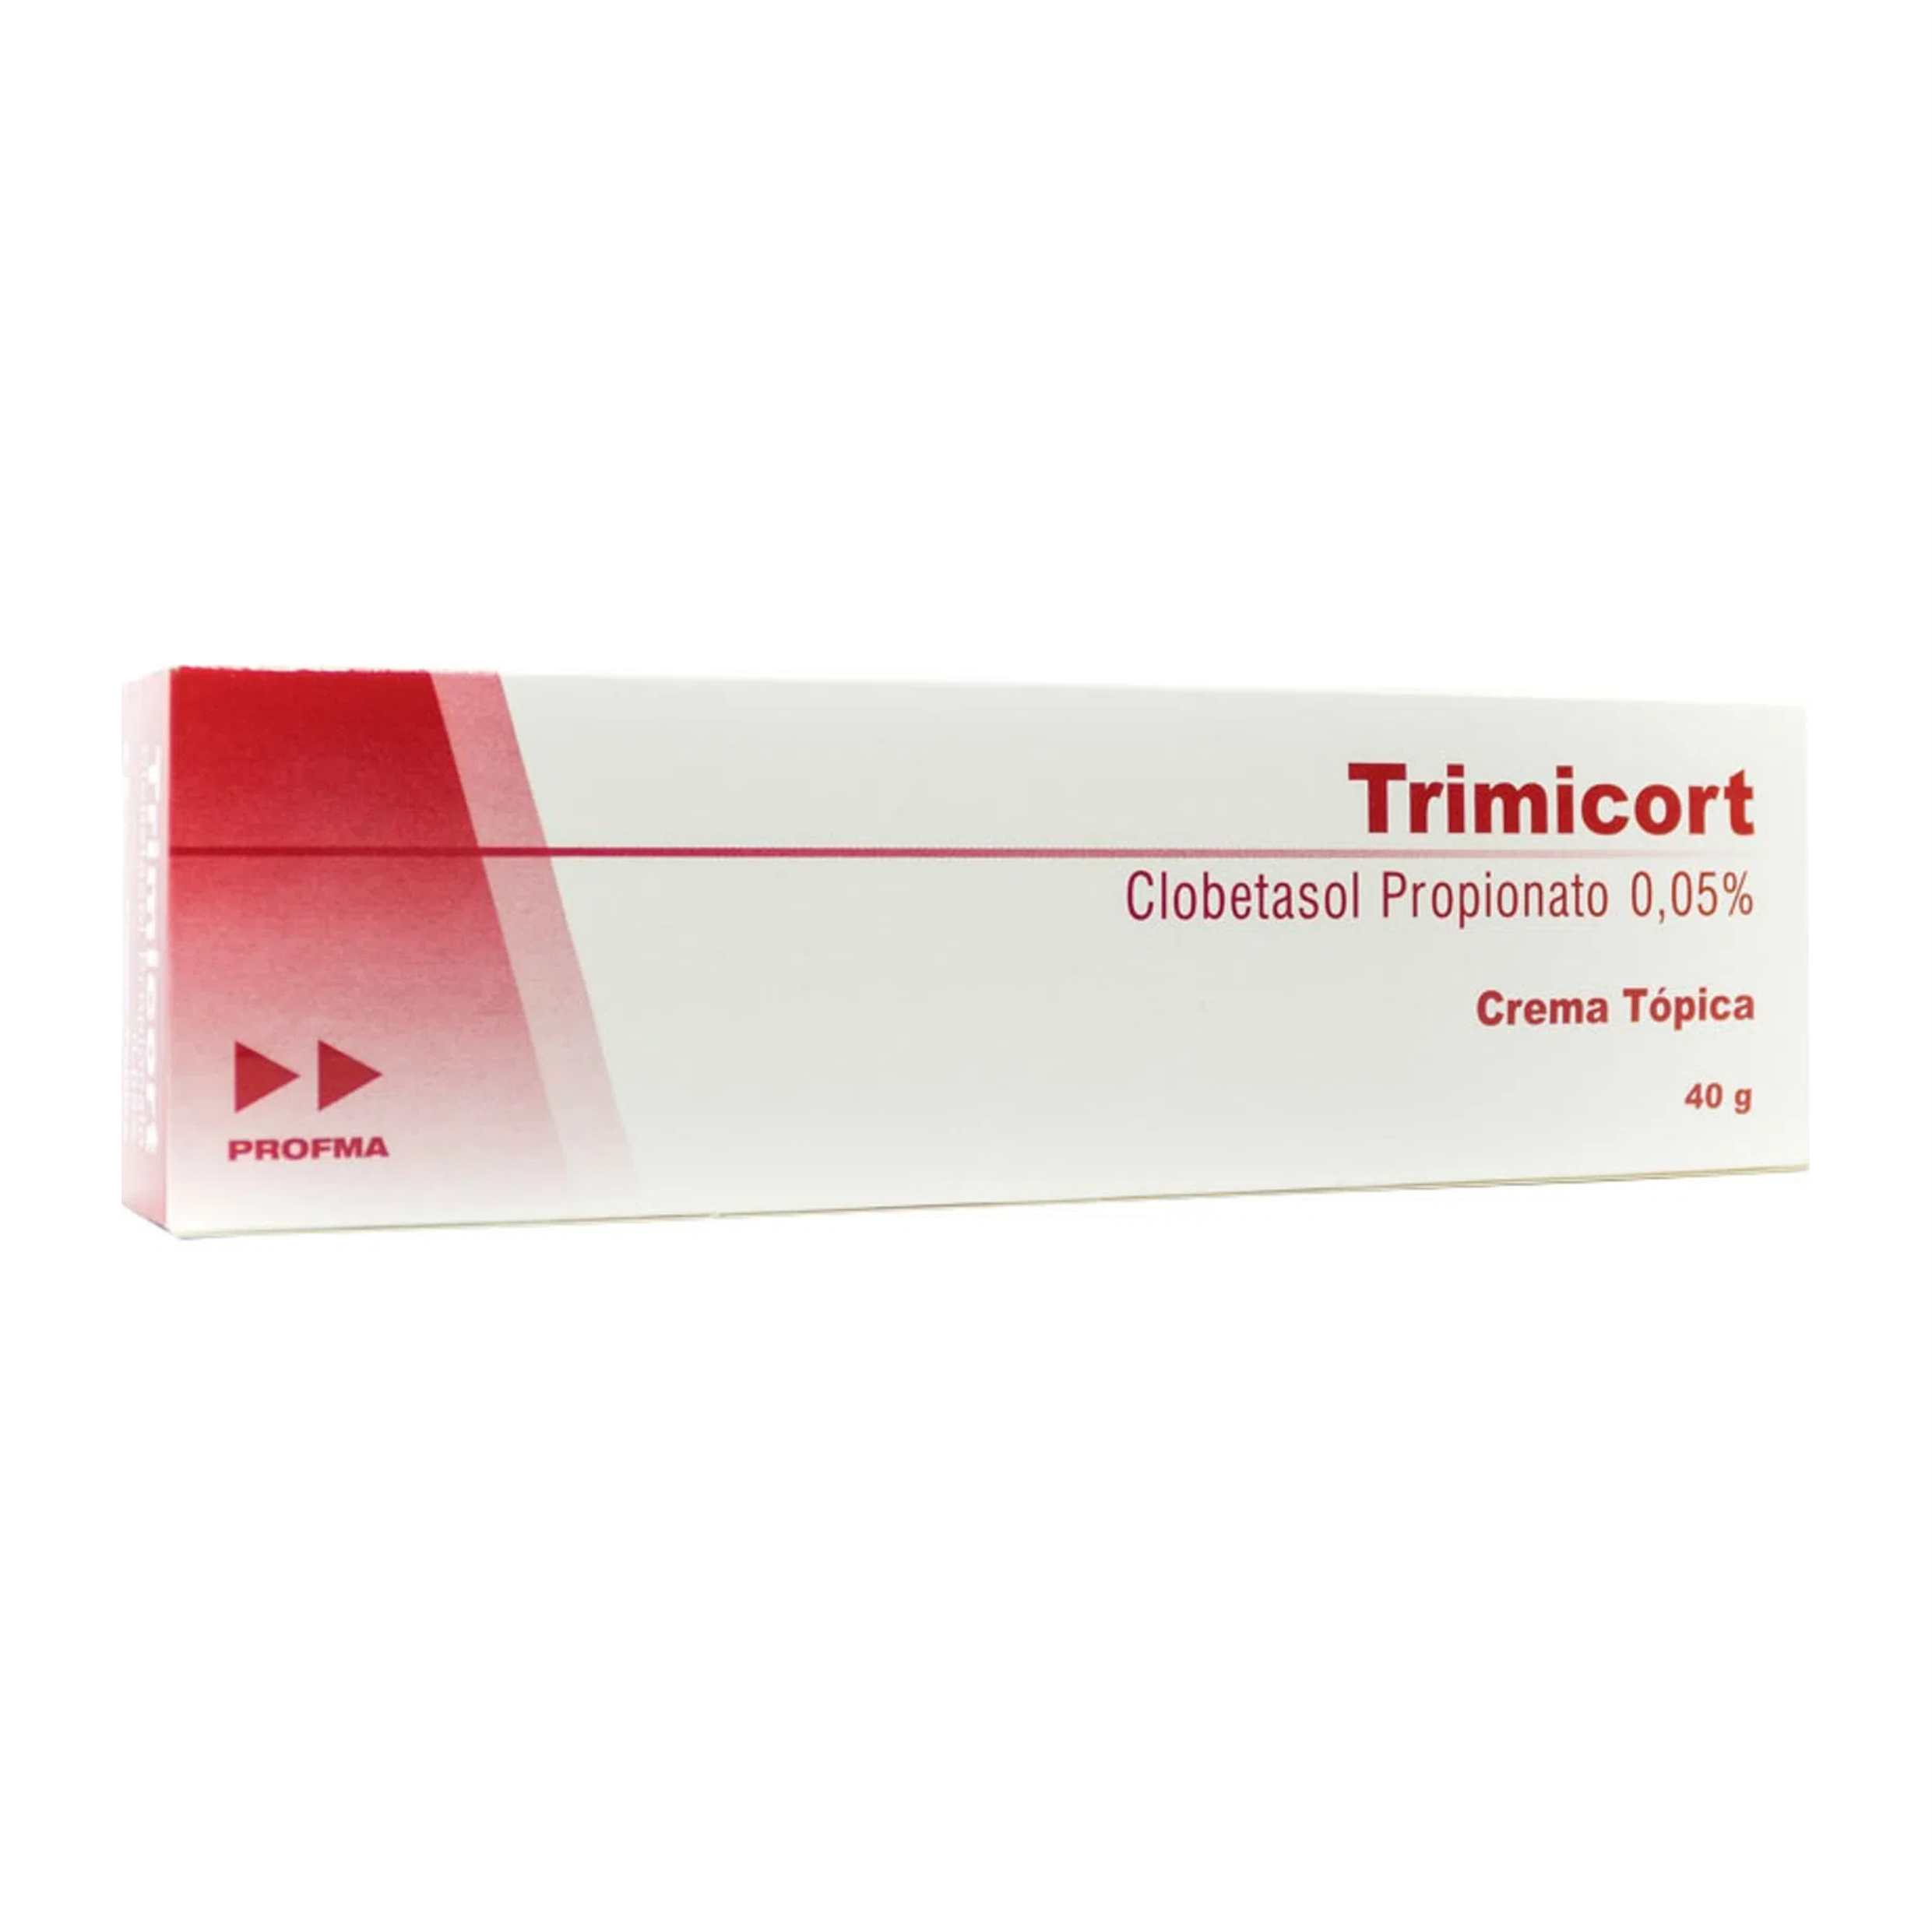 Trimicort 0,05% Crema Tópica 40g